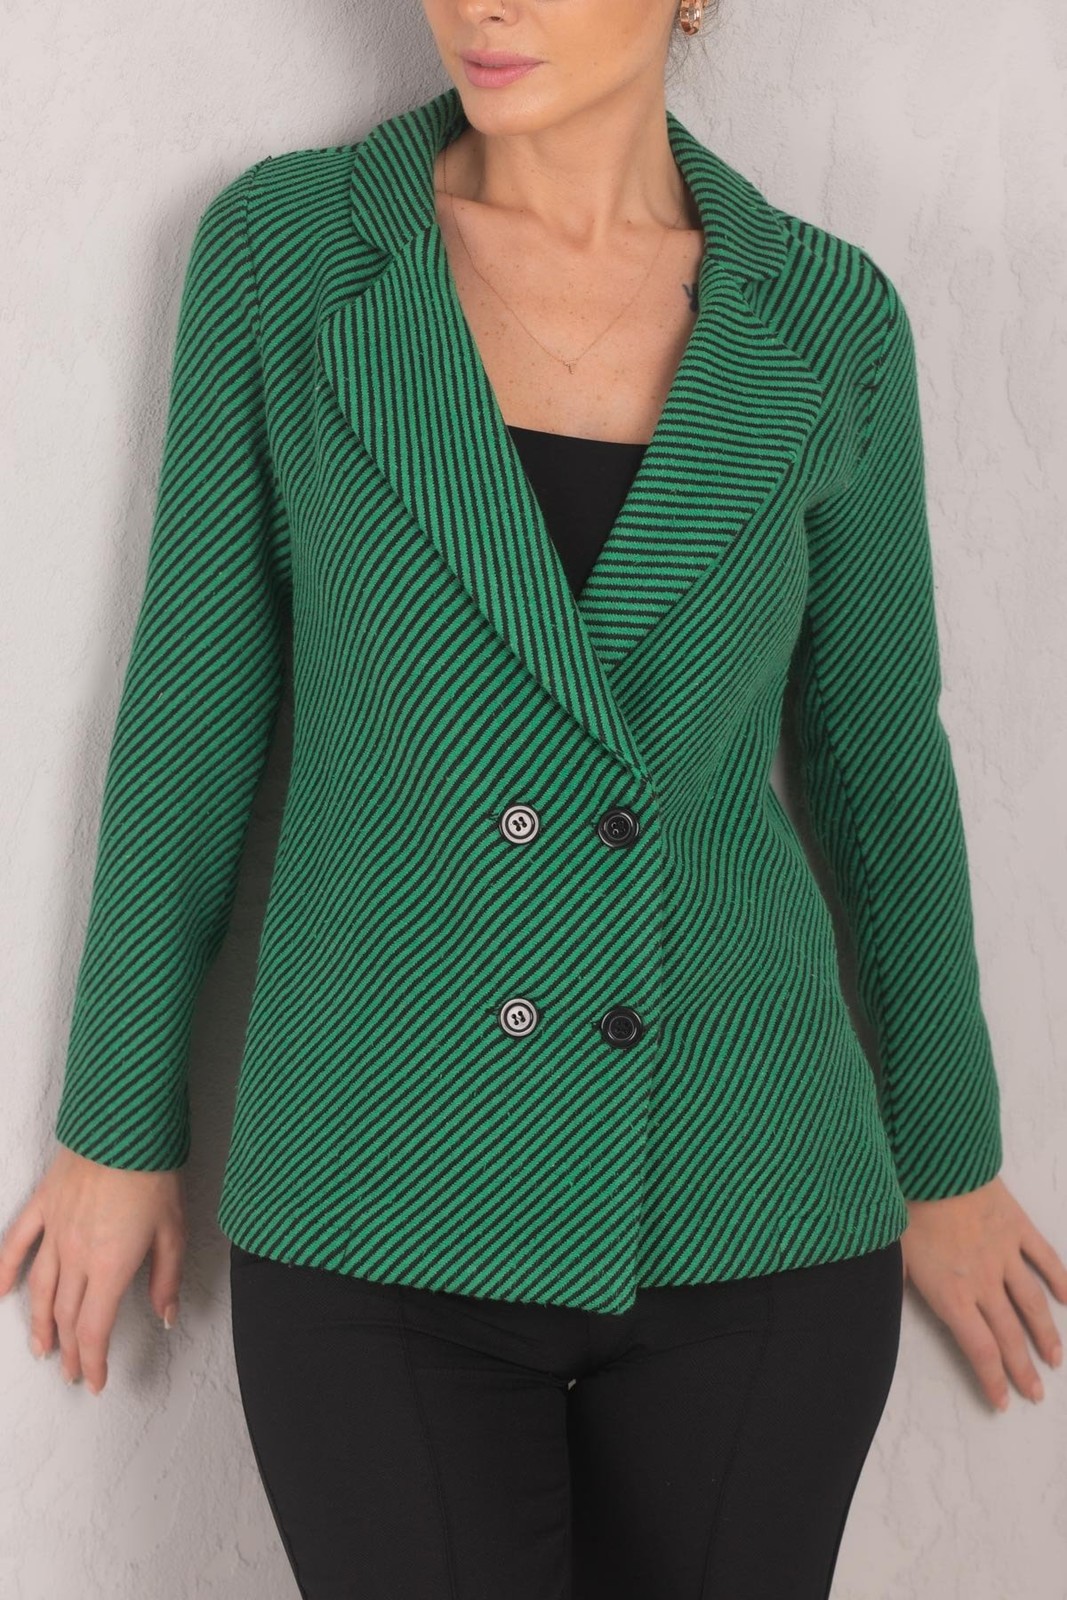 armonika Women's Green Stripe Patterned Four Button Cachet Jacket